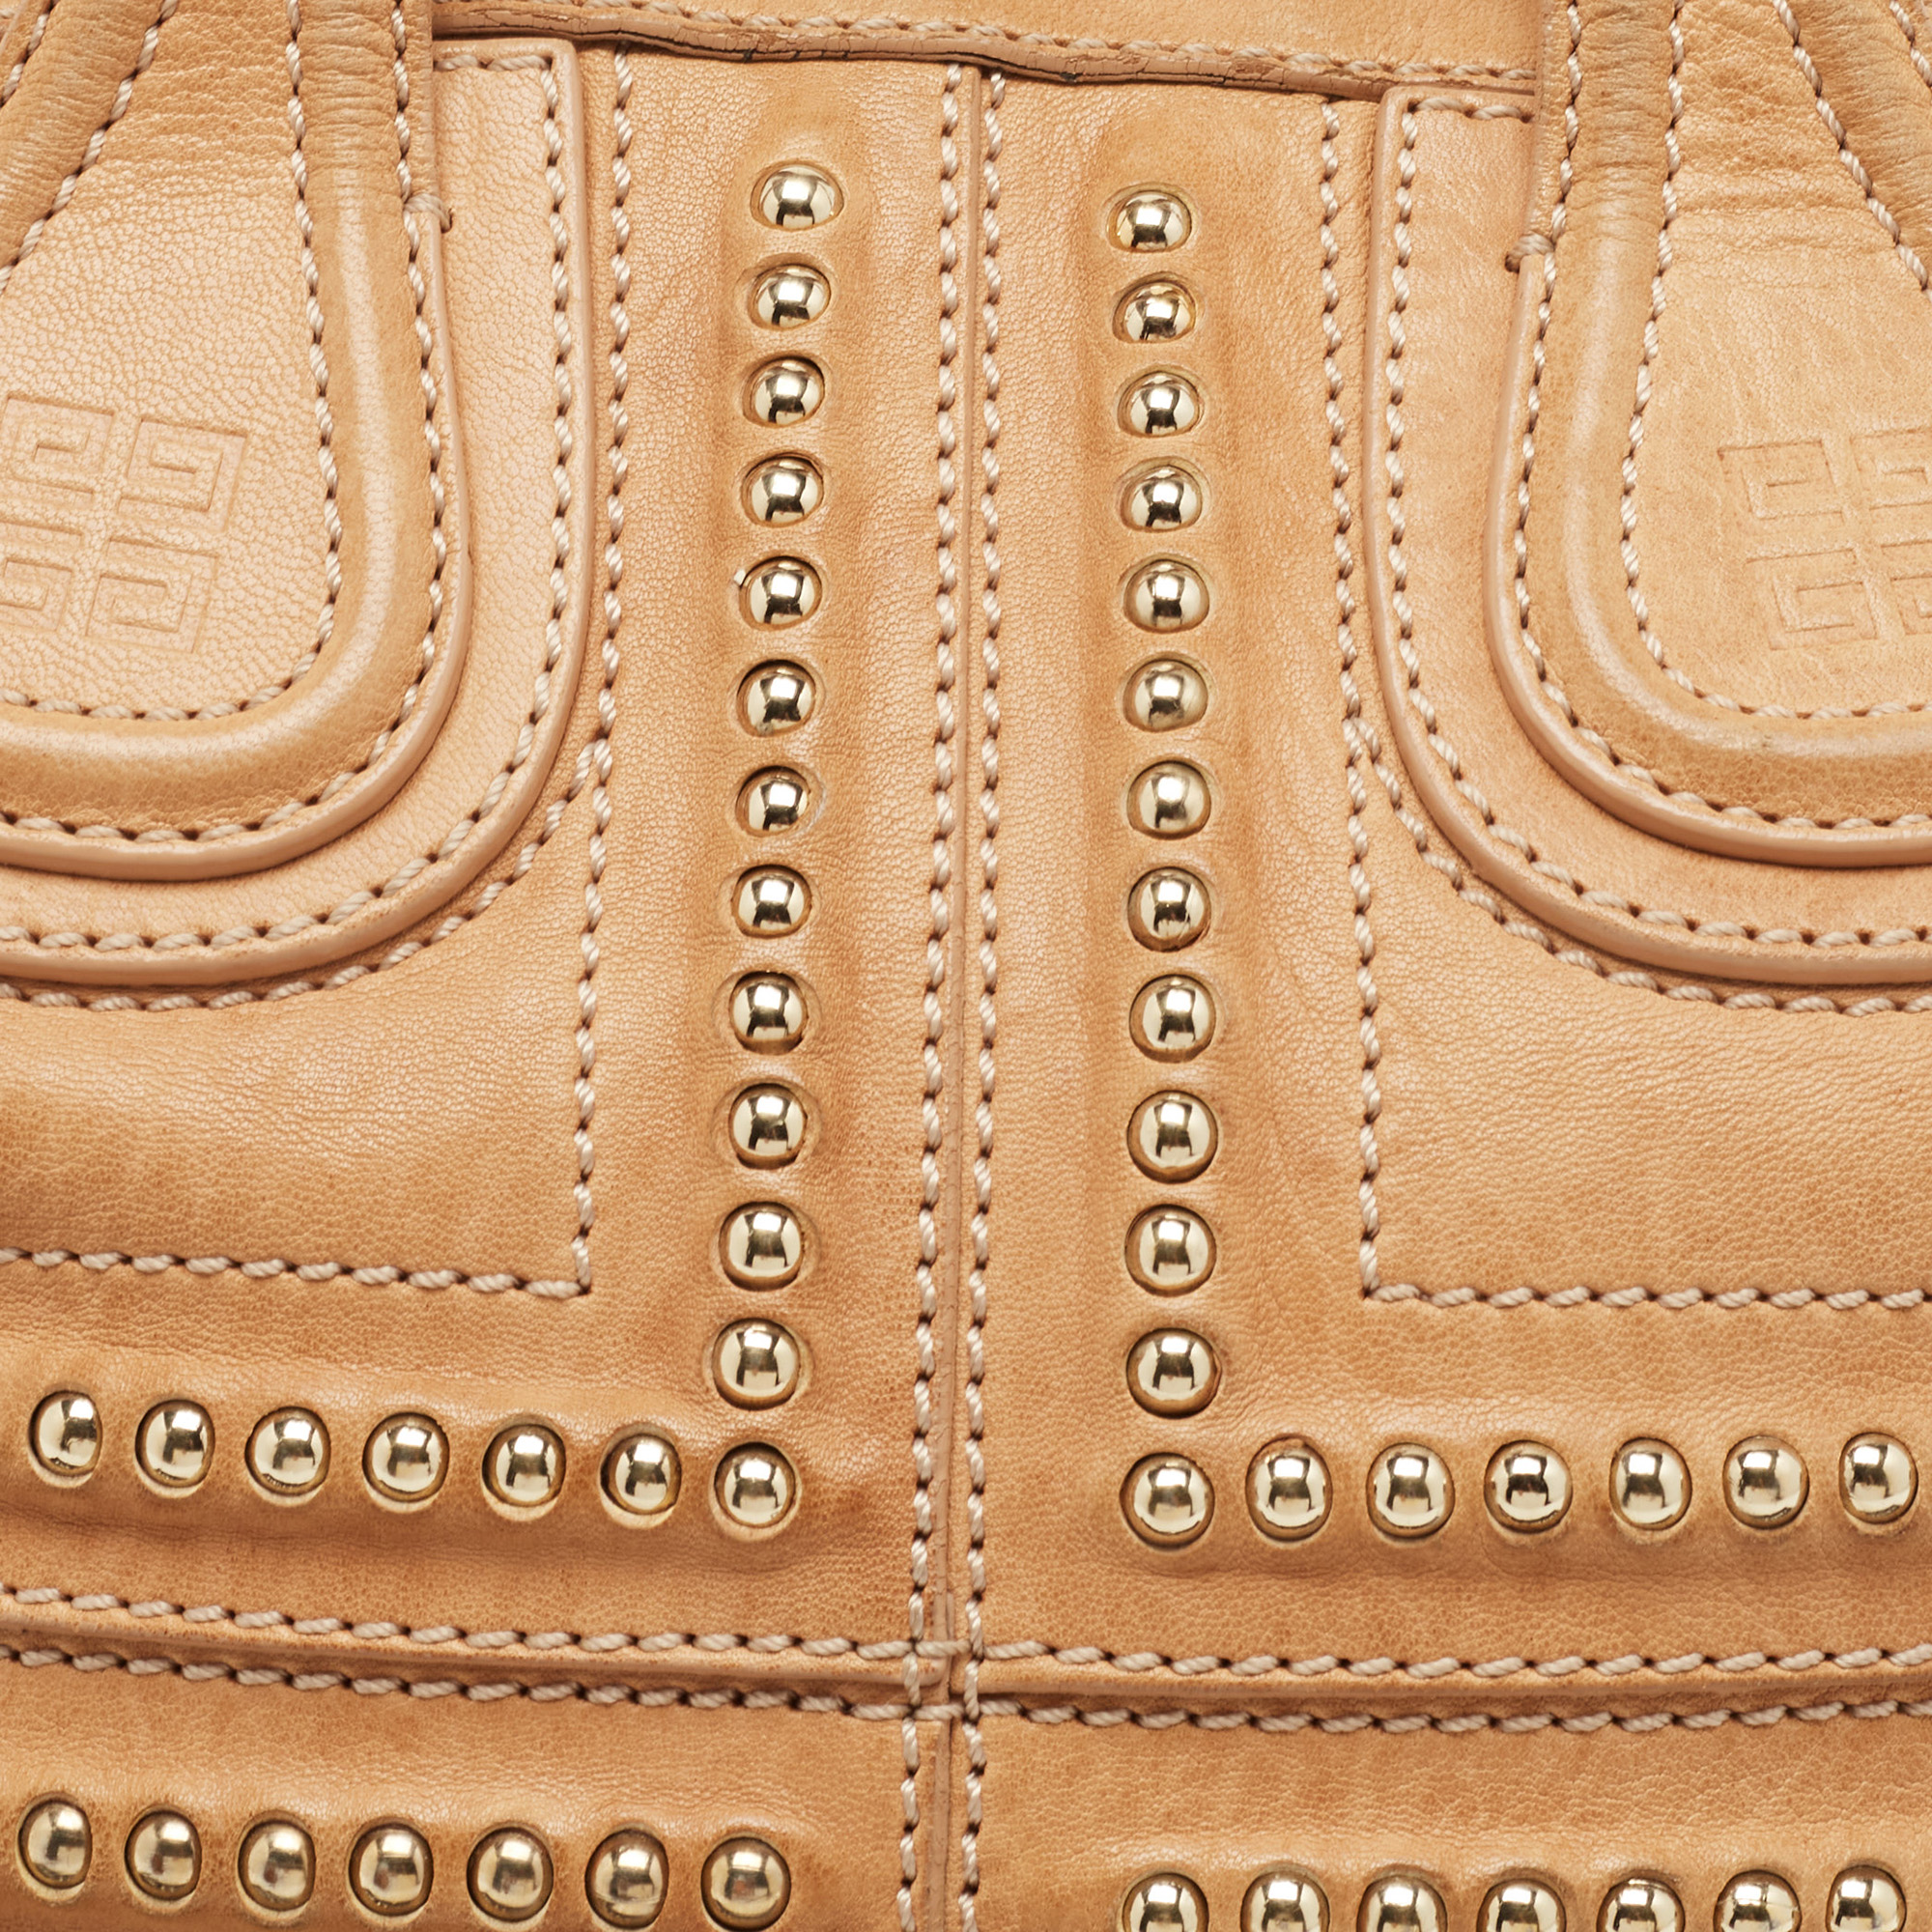 Givenchy Beige Leather Studded Nightingale Bag